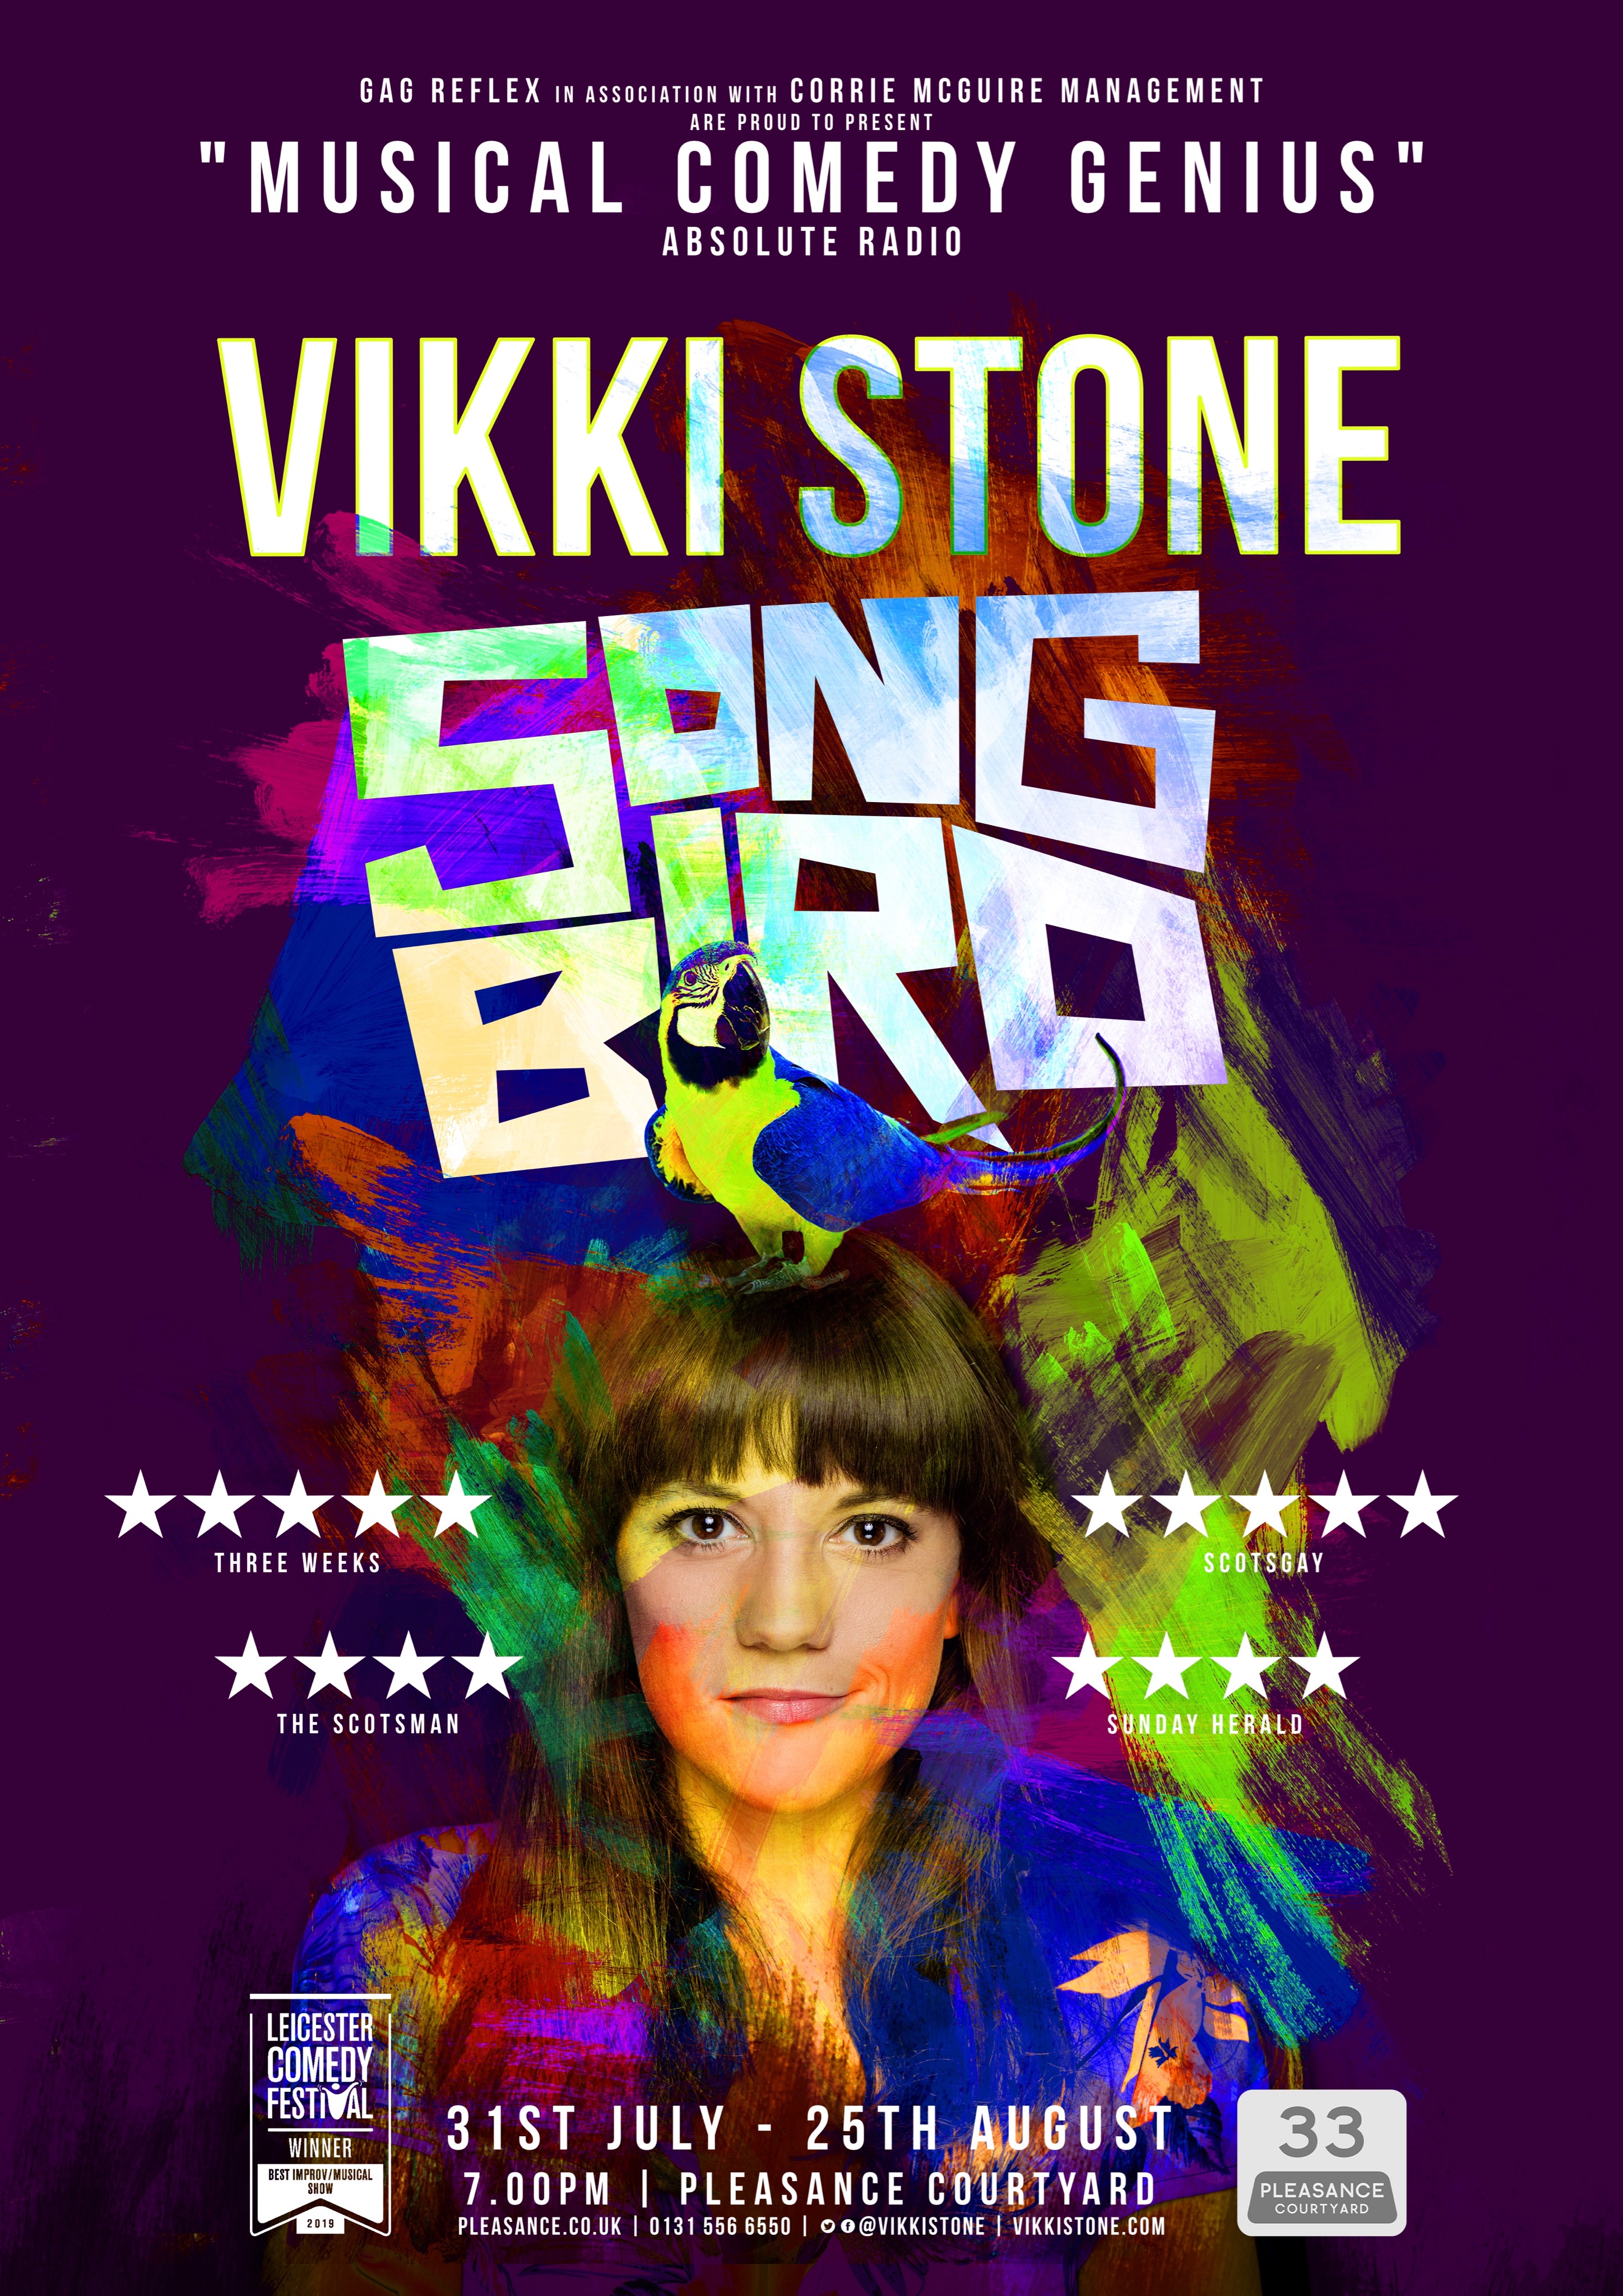 The poster for Vikki Stone: Song Bird